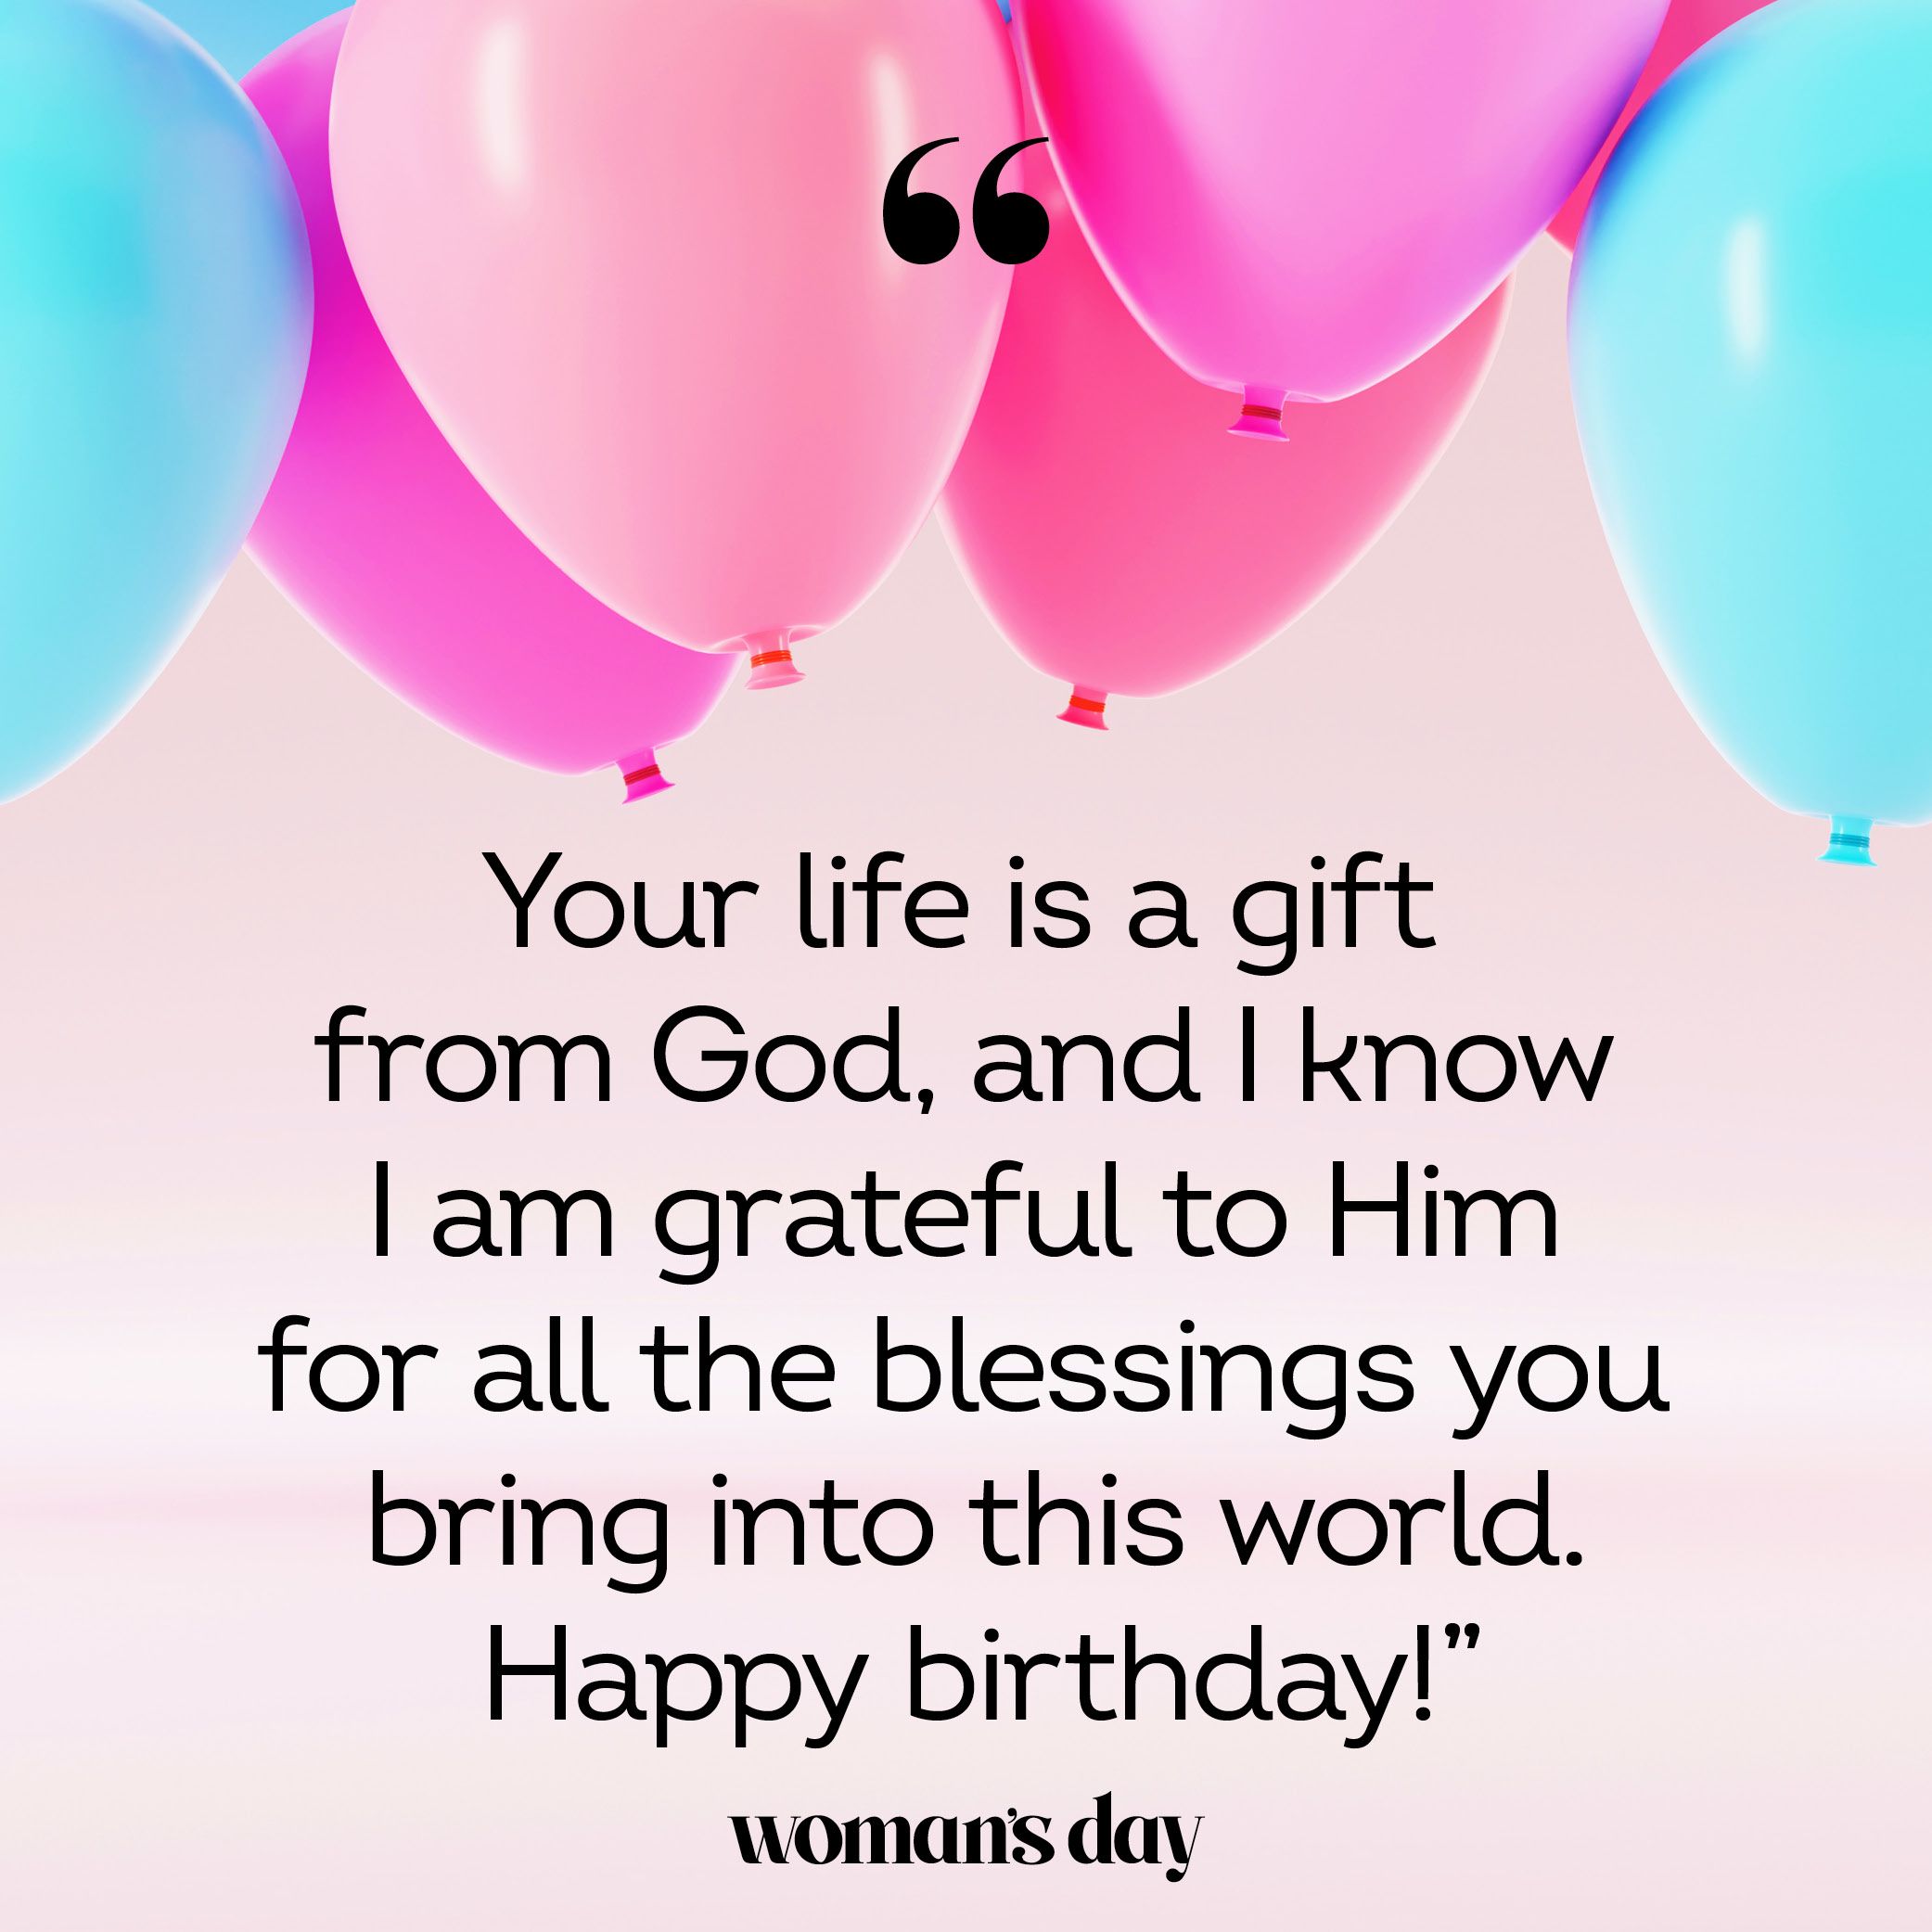 birthday message for friend